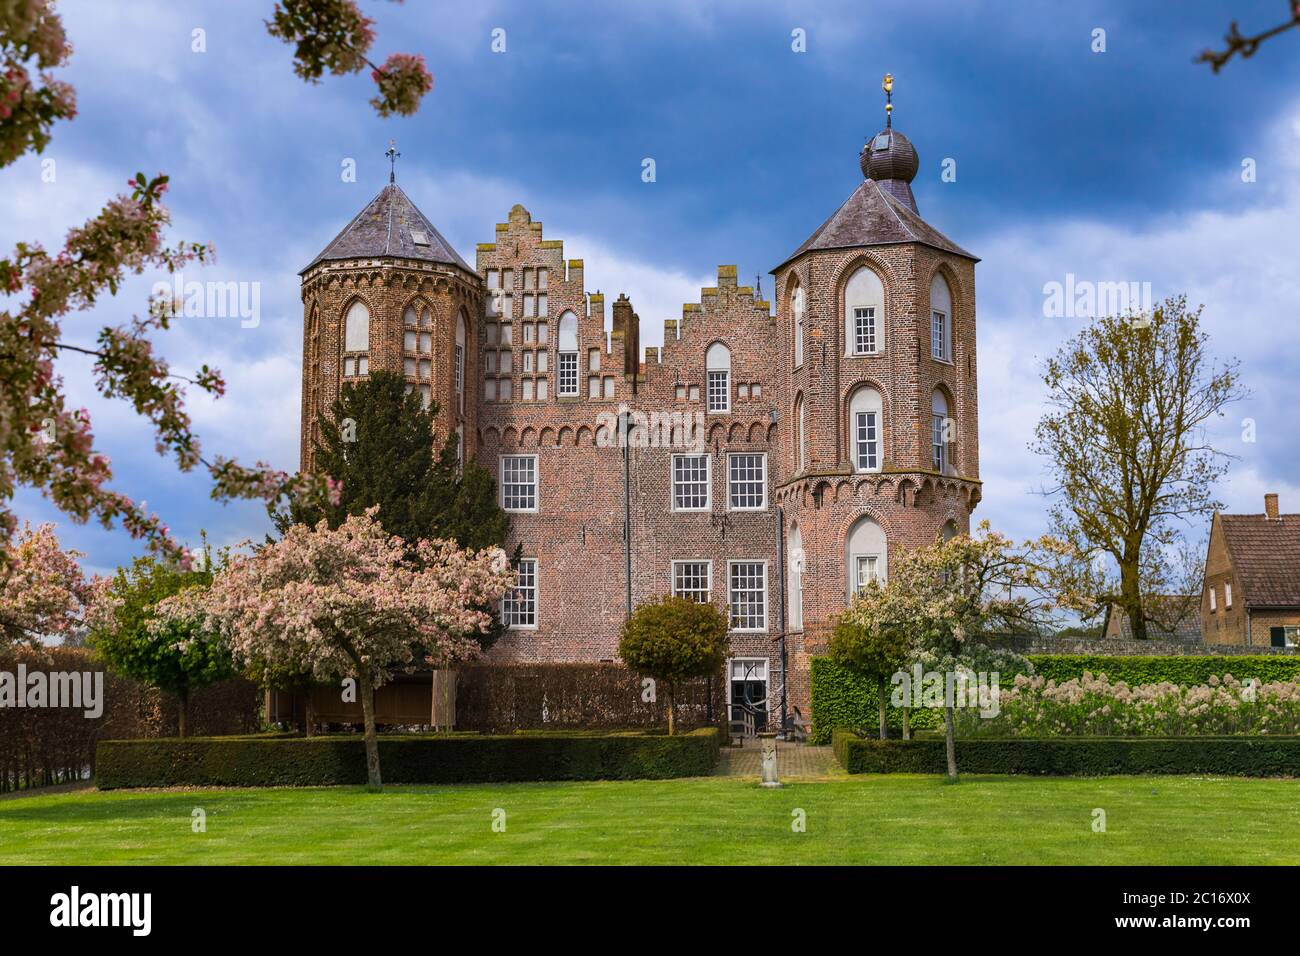 Castle Kasteel Croy in Netherlands Stock Photo